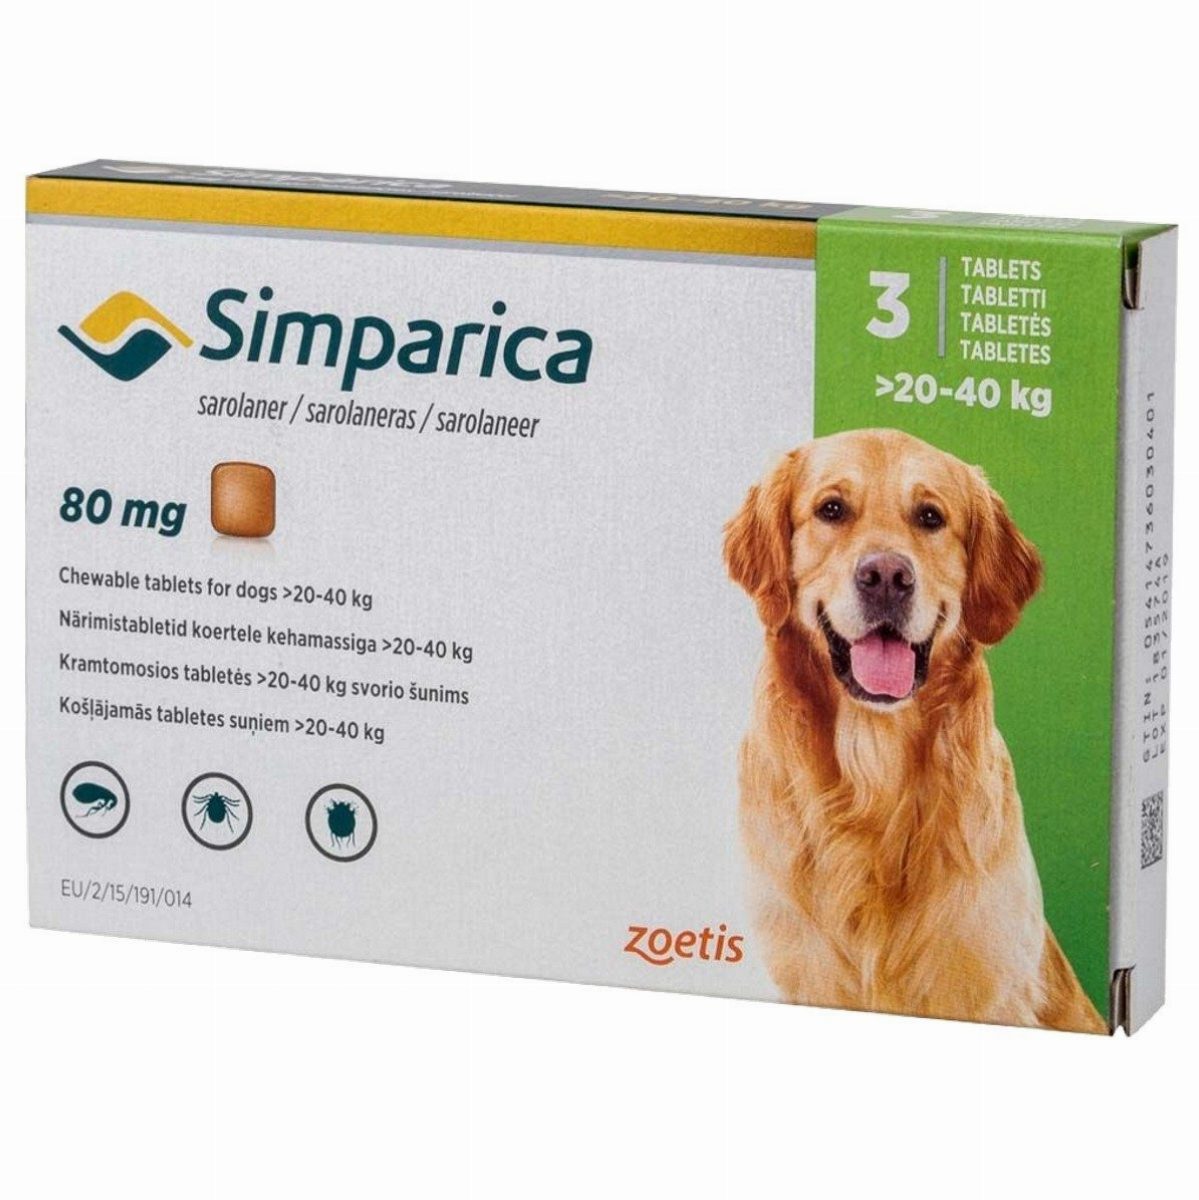 simparica 80 mg. x1 (20- 40kg) – Veterinaria PetAttention